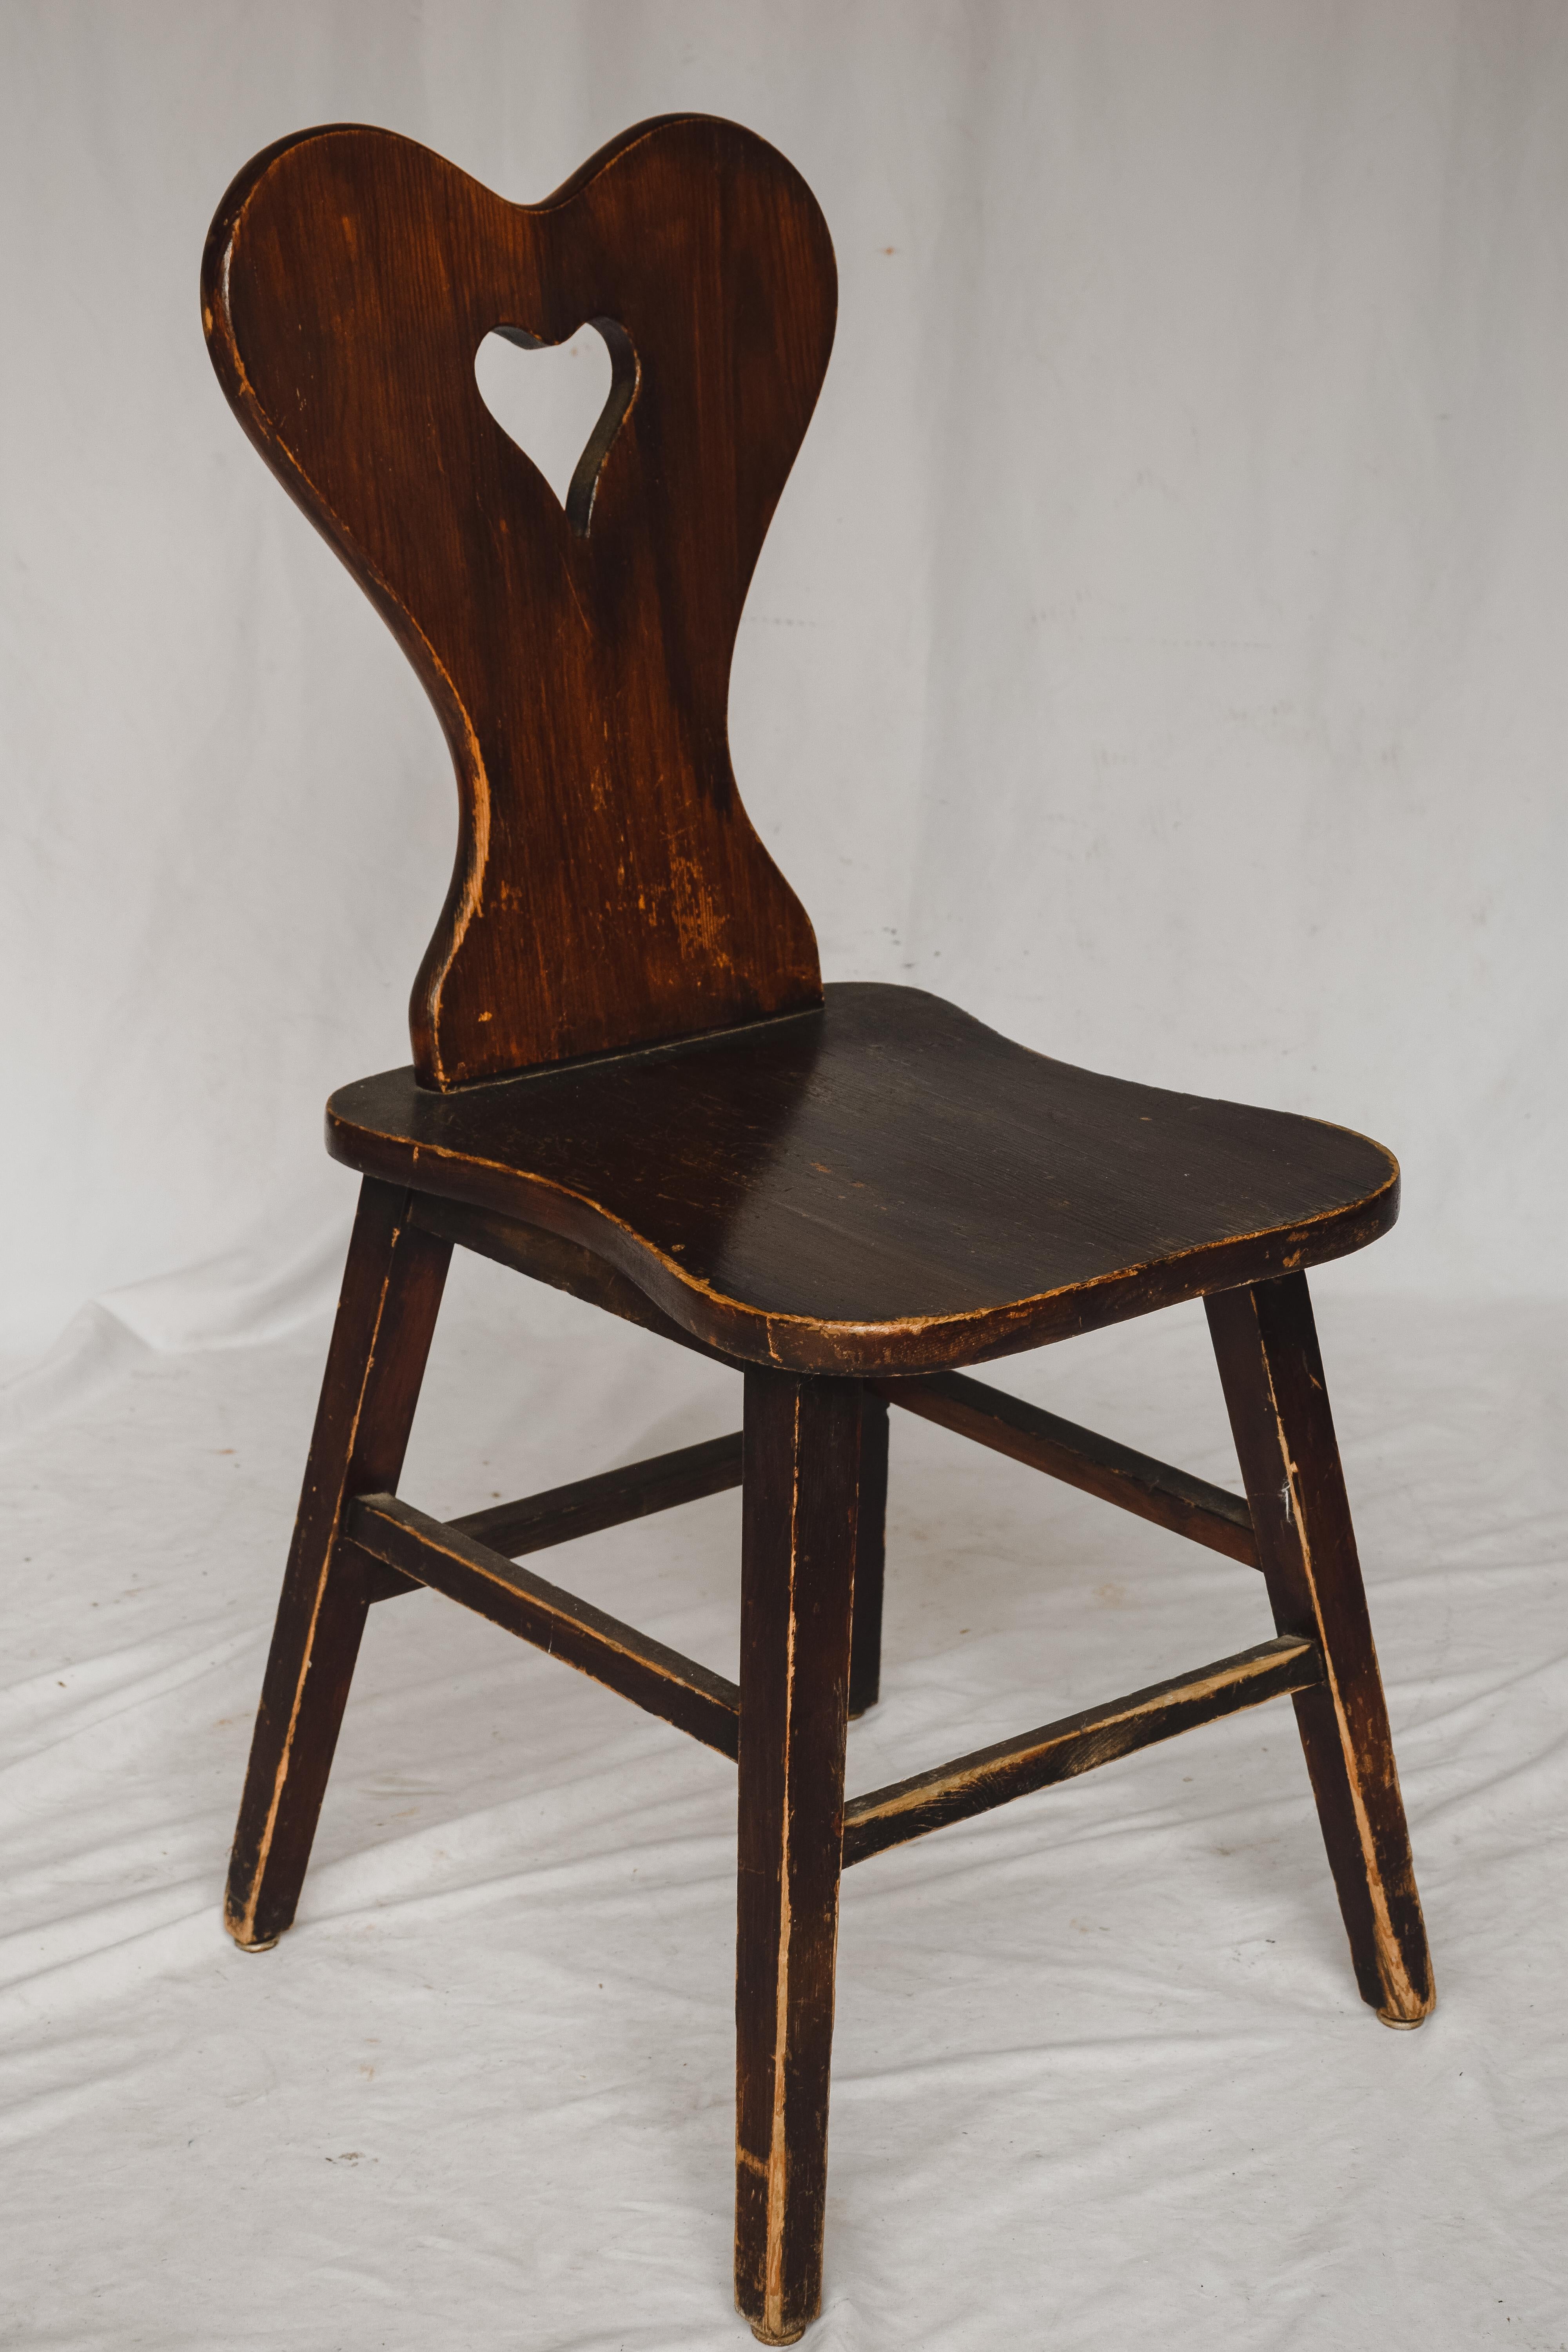 Wooden Heart Shaped Chair 1